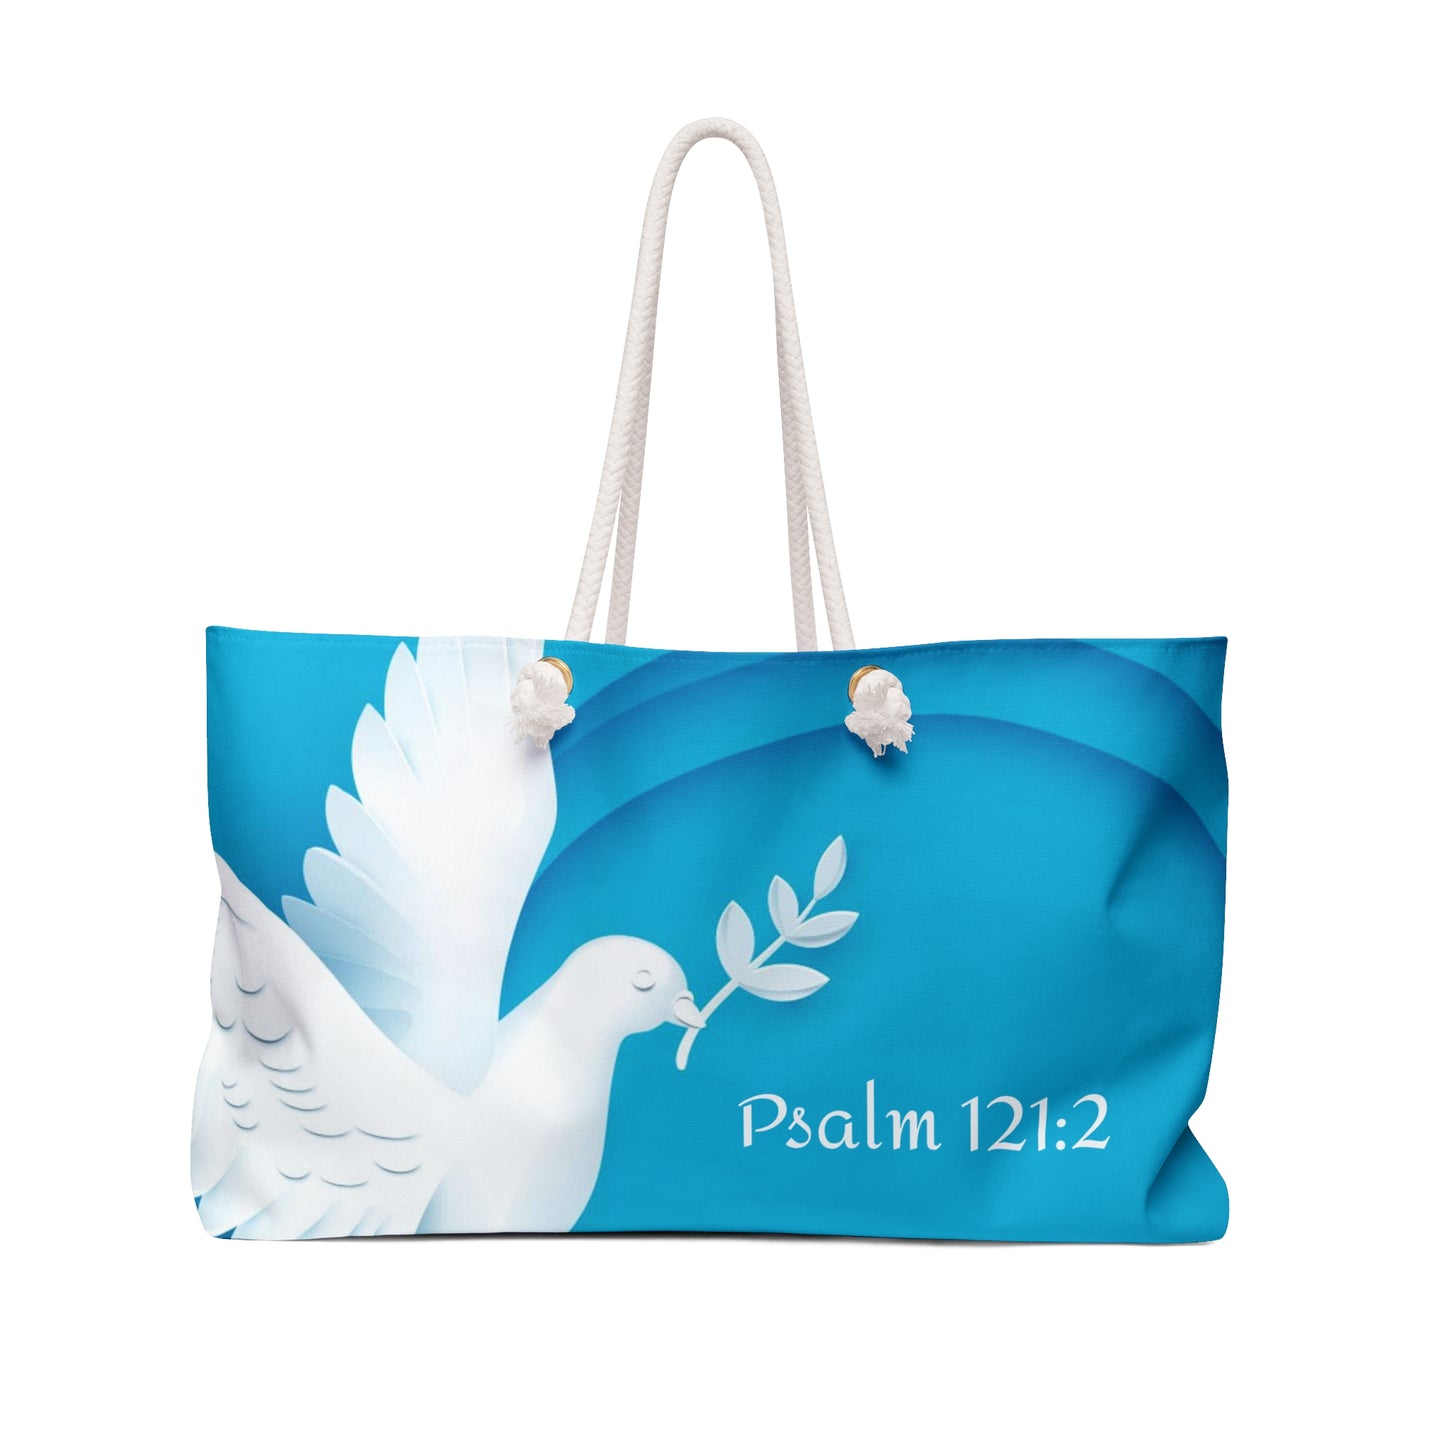 Psalm 121:2 Tote Bag